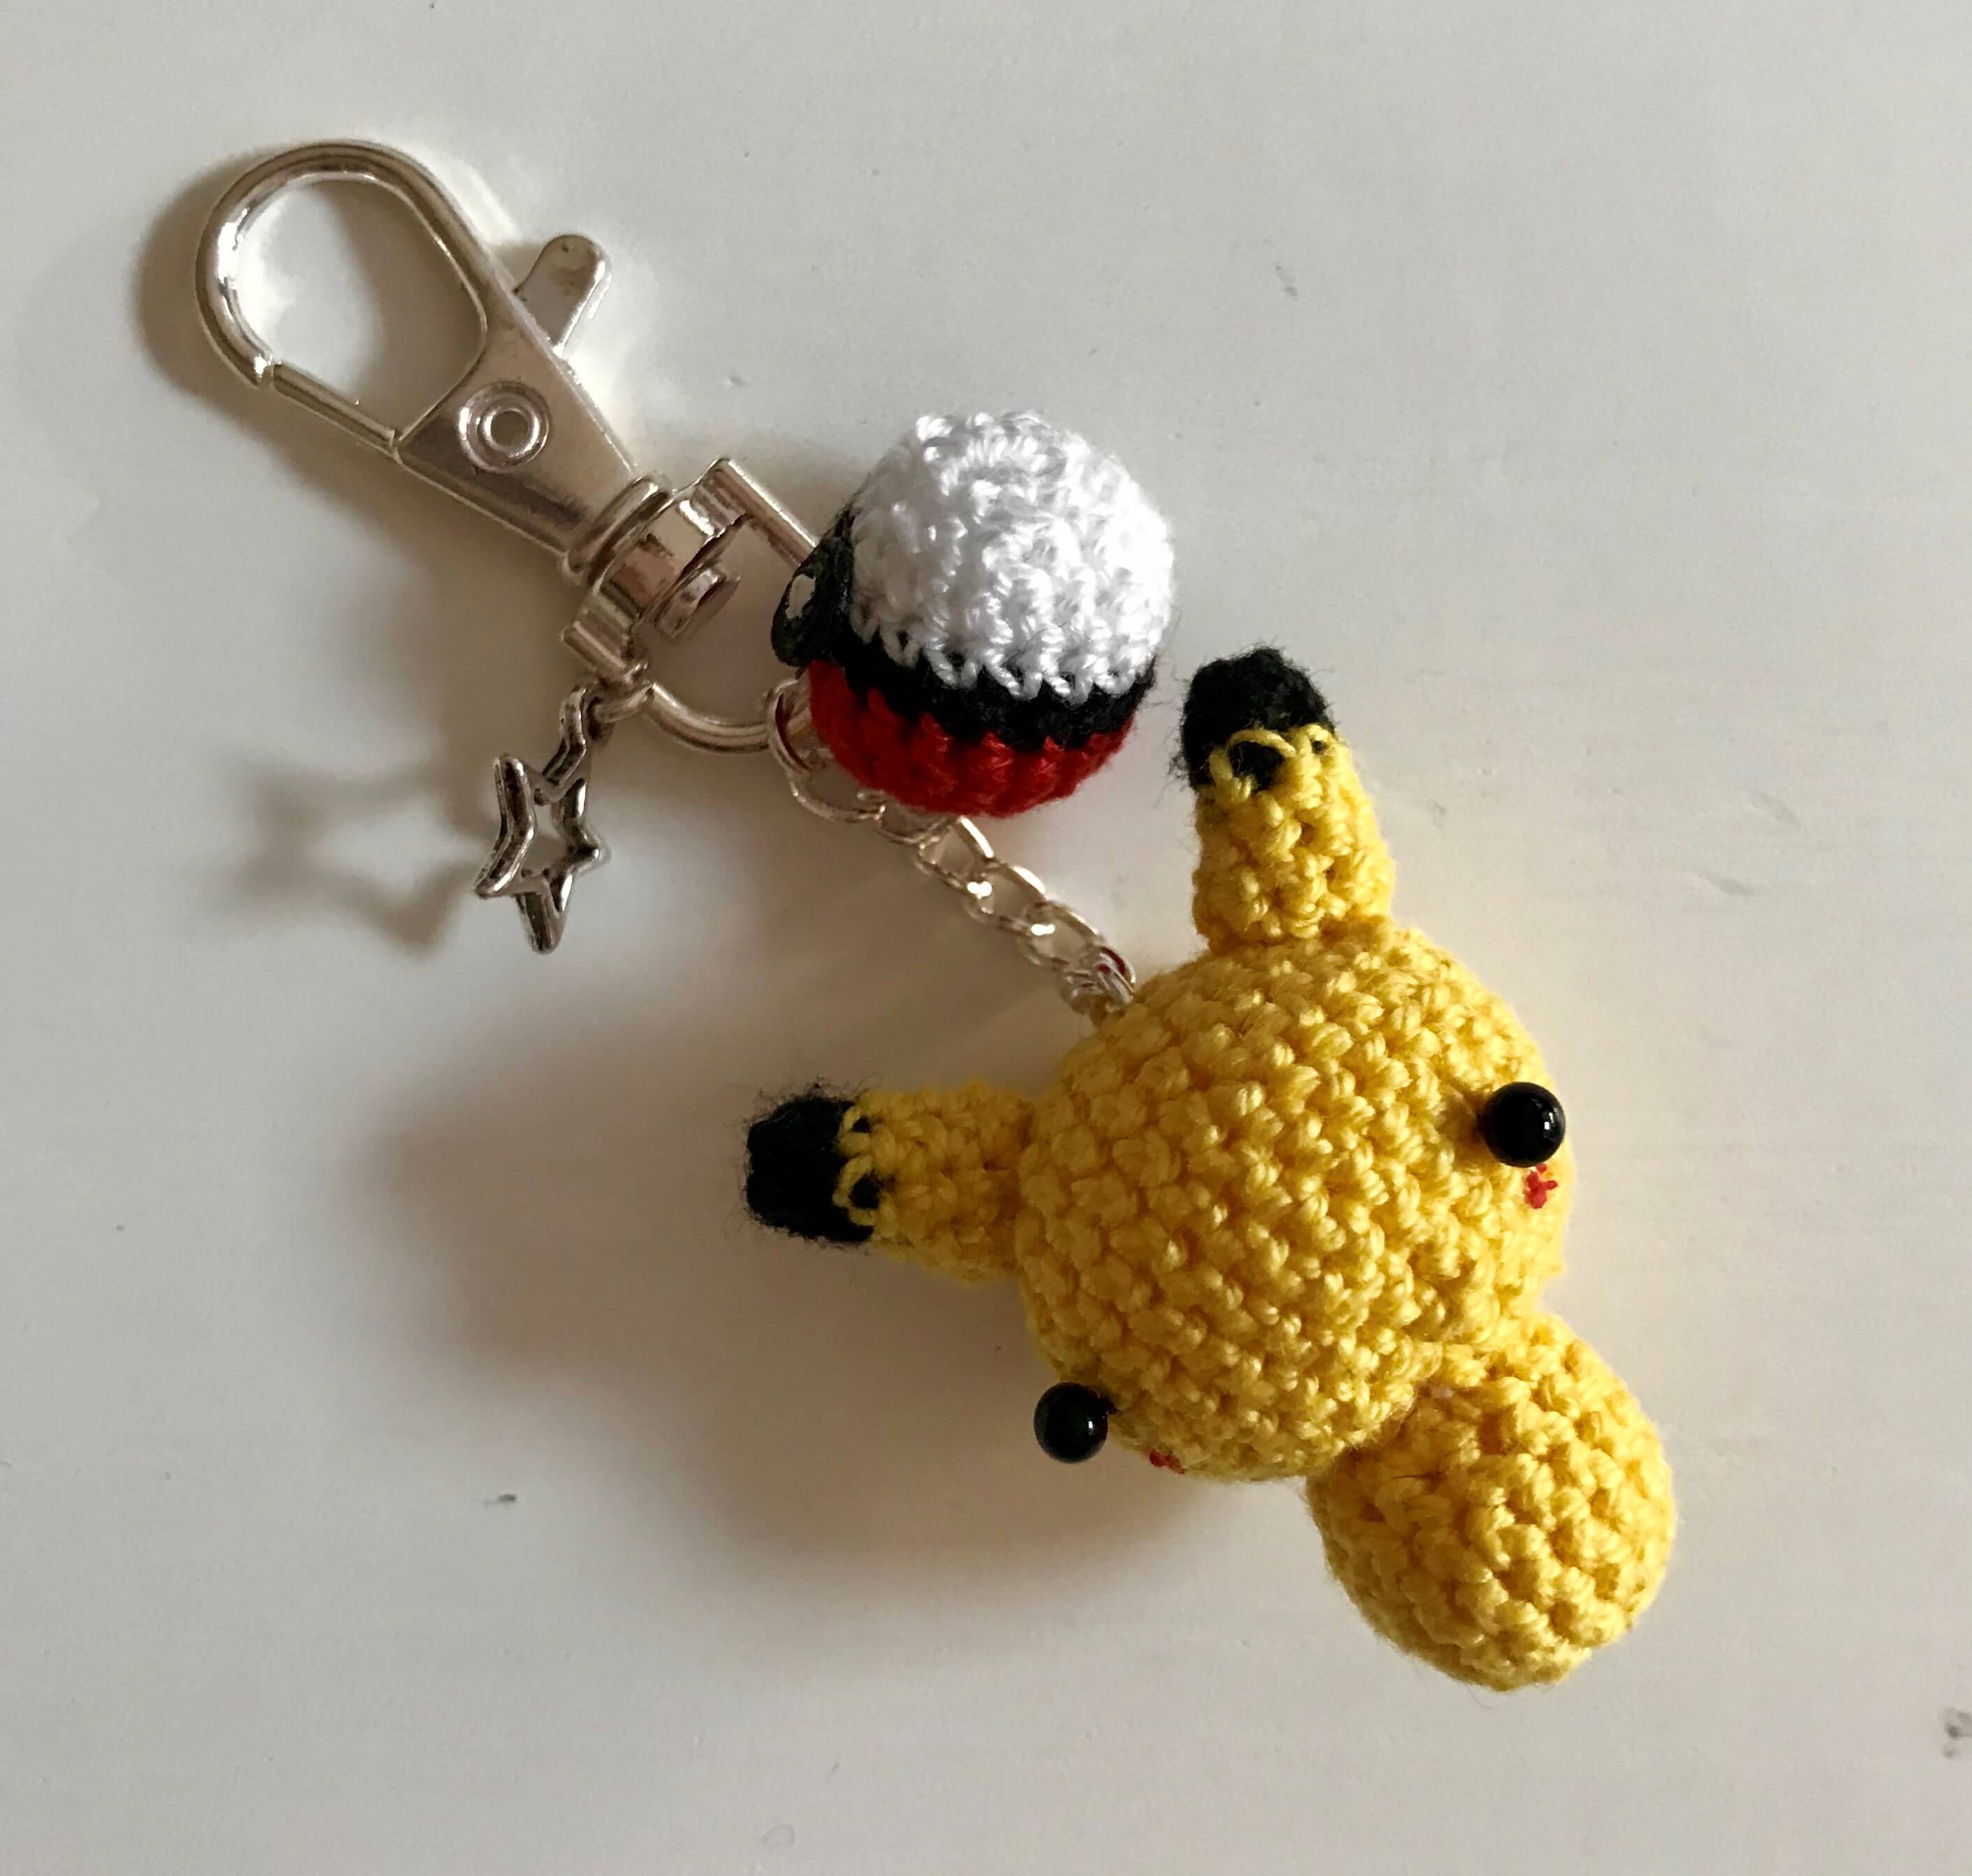 Porte Clef Pikachu, Juillet - Pokémon